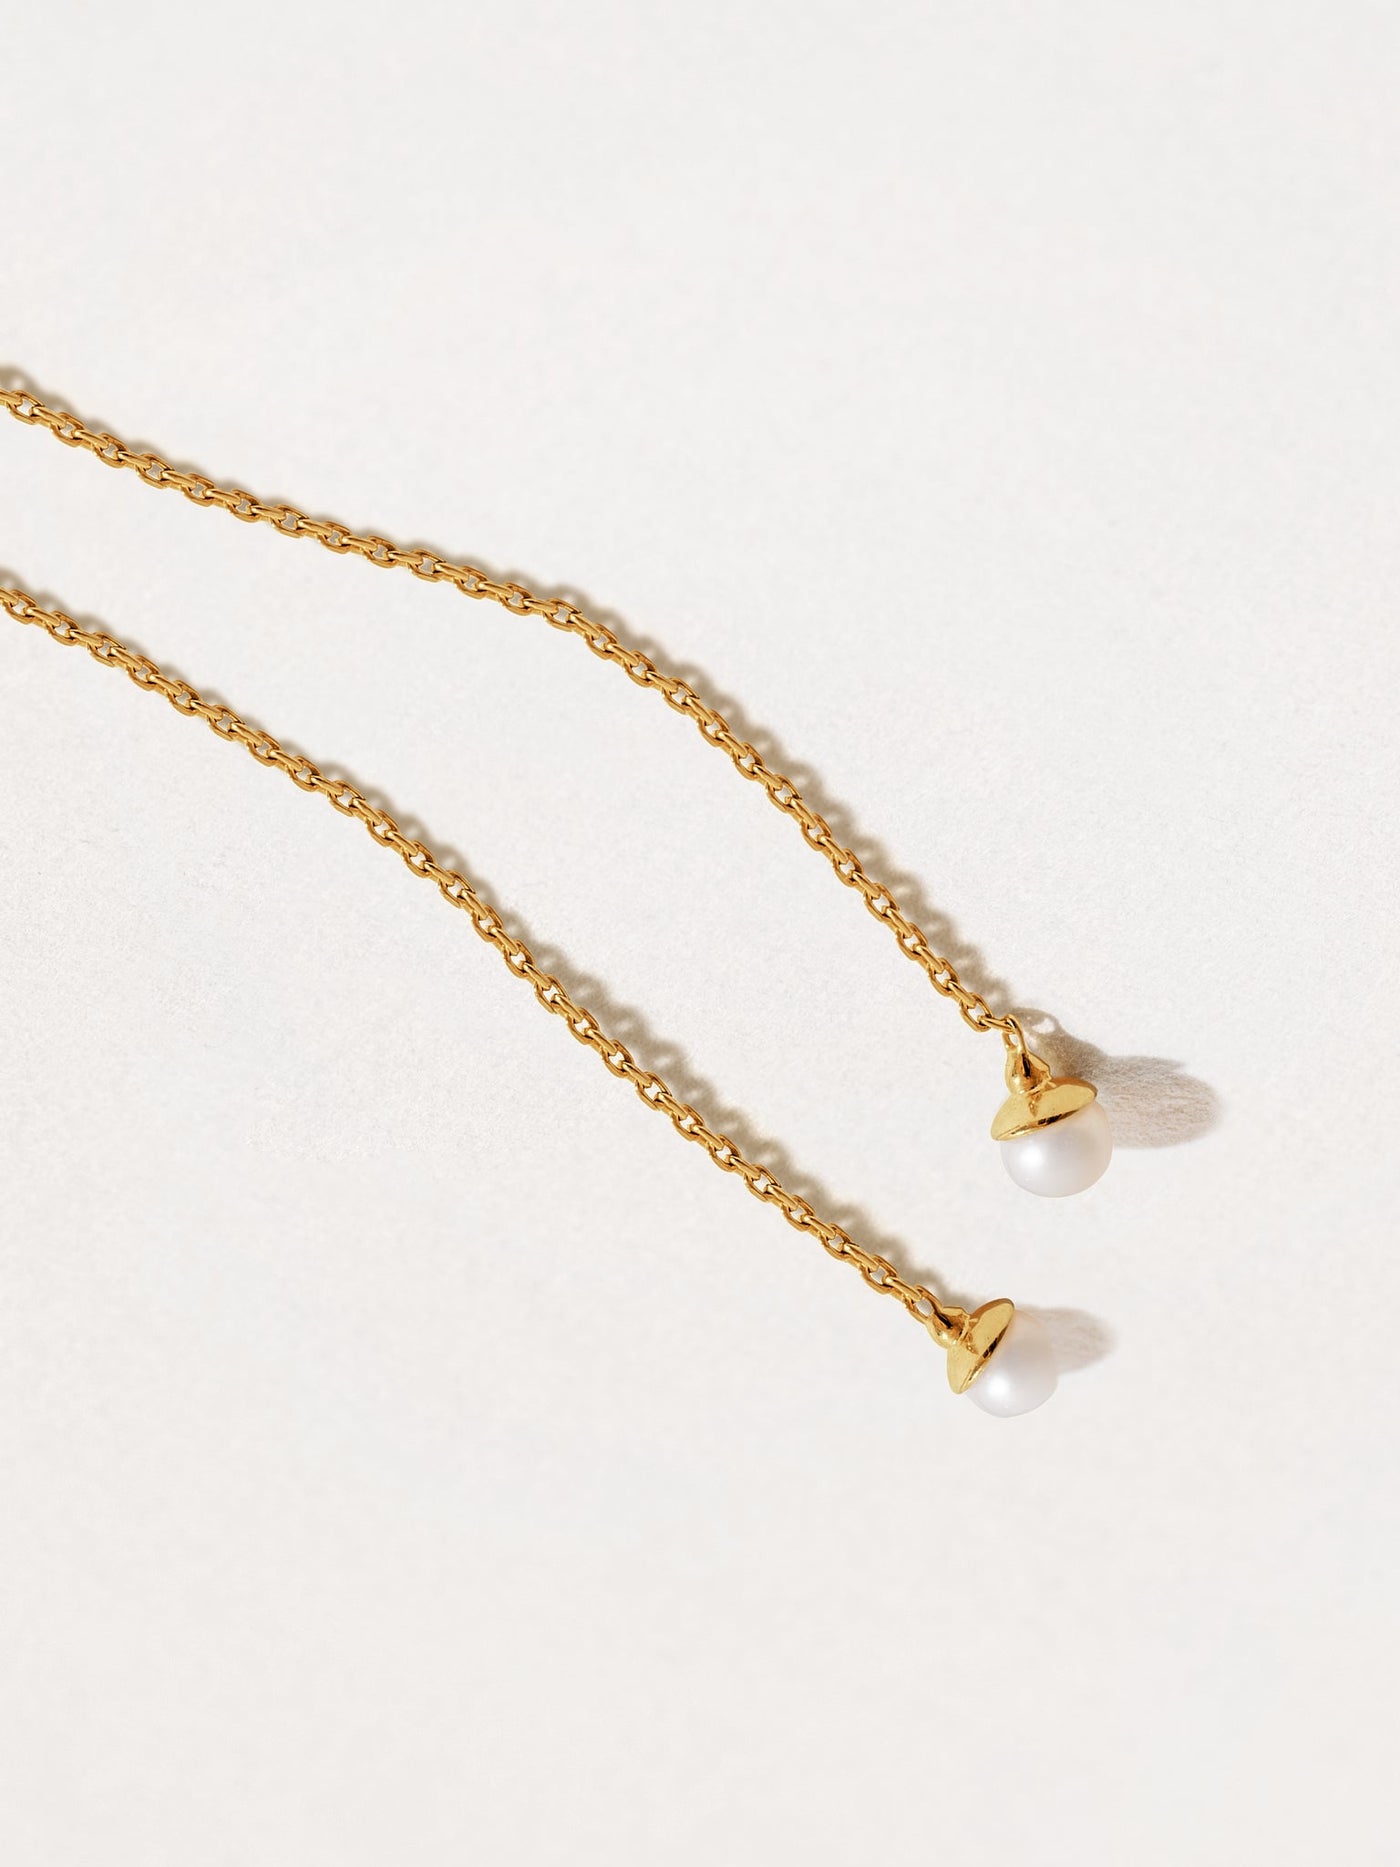 Ullyna Small Pearl Ear Thread Earrings - Yellow Gold 5mm10Aesthetic JewelryBaroque PearlsLunai Jewelry